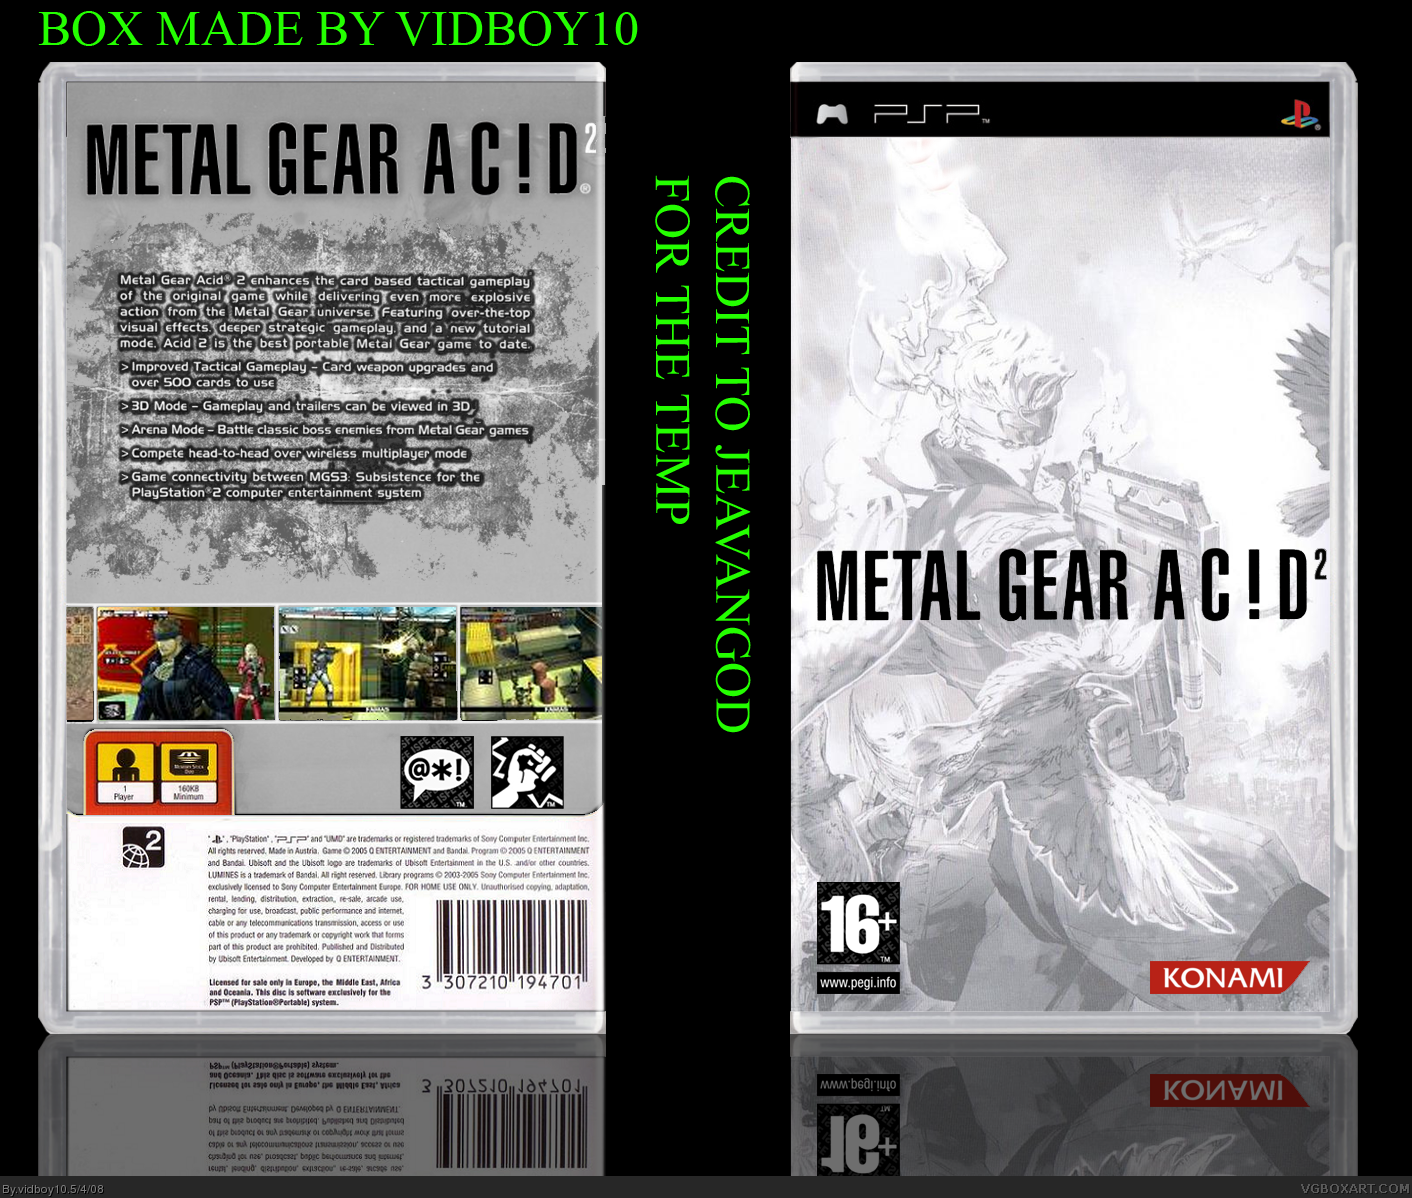 Metal Gear Acid 2 box cover